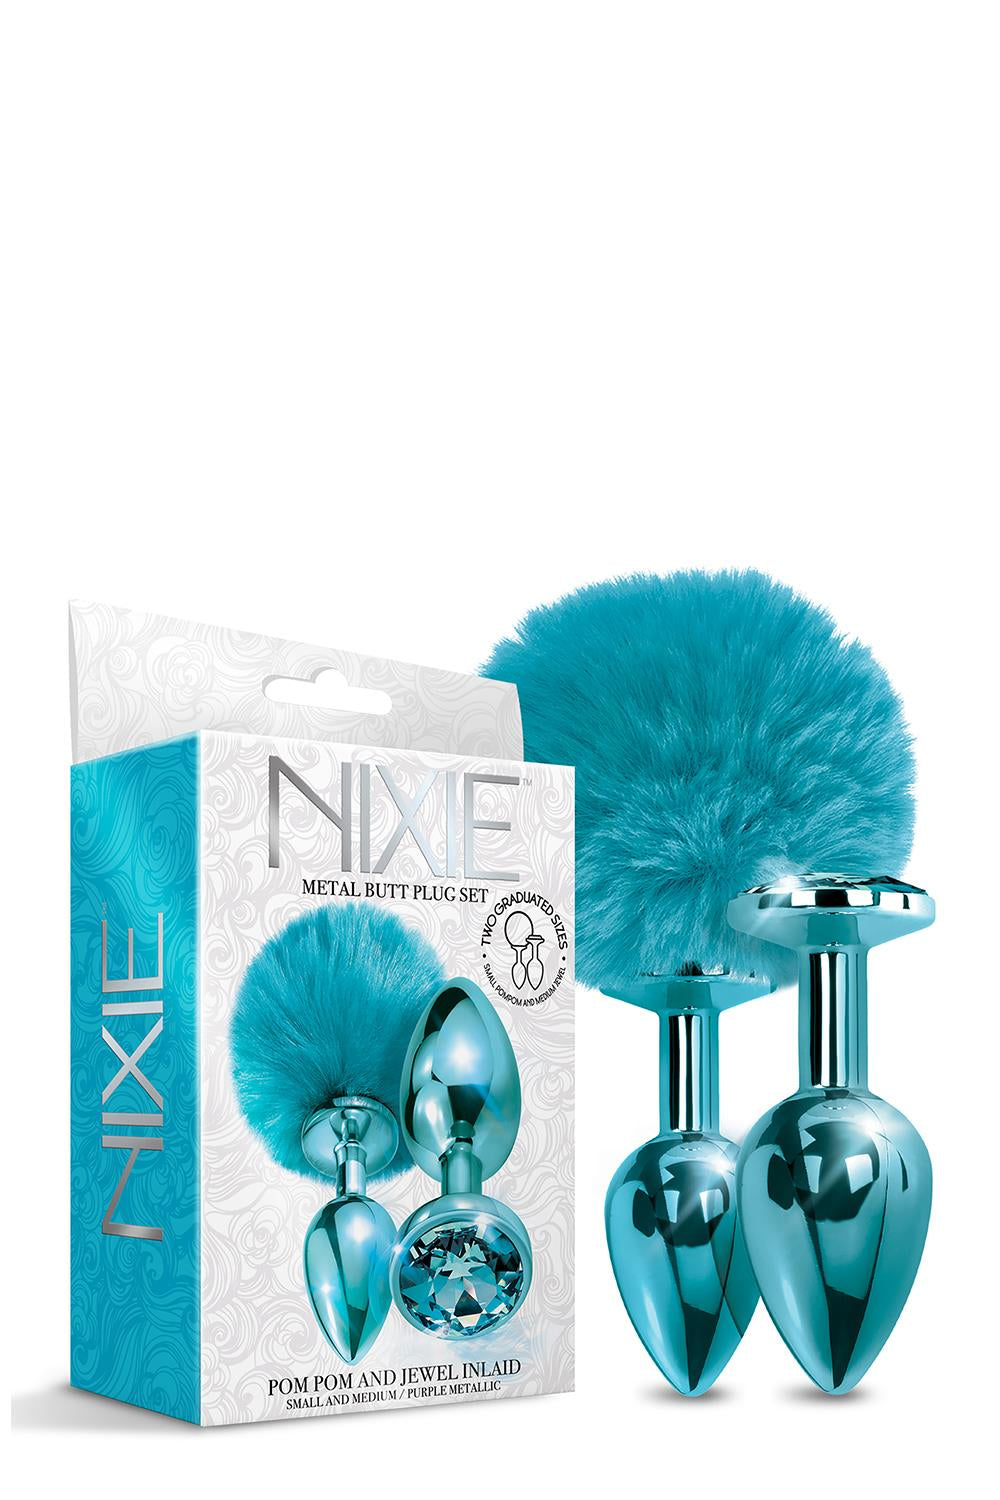 Nixie Metal Butt Plug Set Pom Pom And Jewel Inlaid Blue Metallic